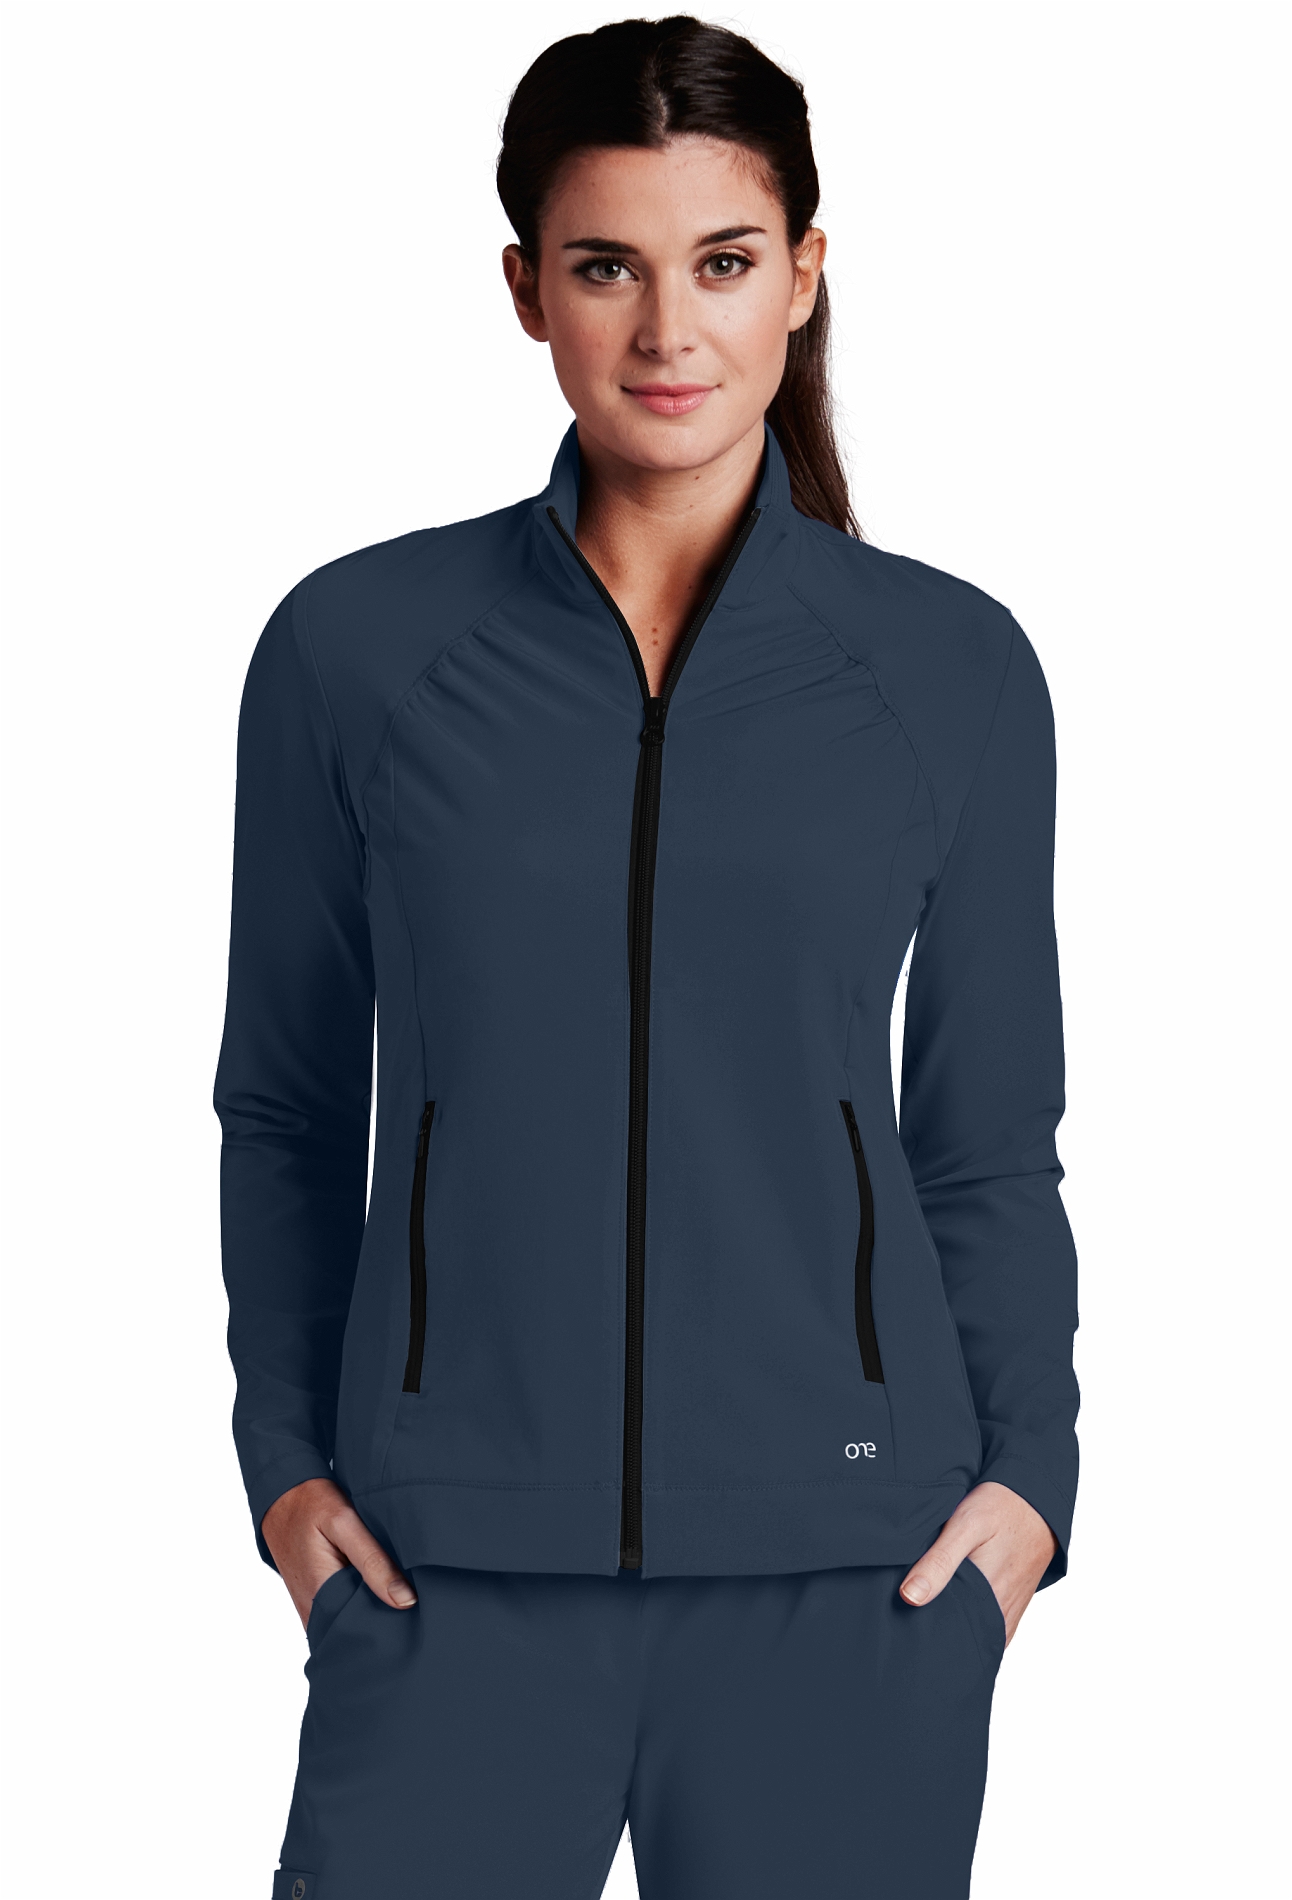 Barco One Women's Modern Fit Zip Up Warm-Up Scrub Jacket-5405